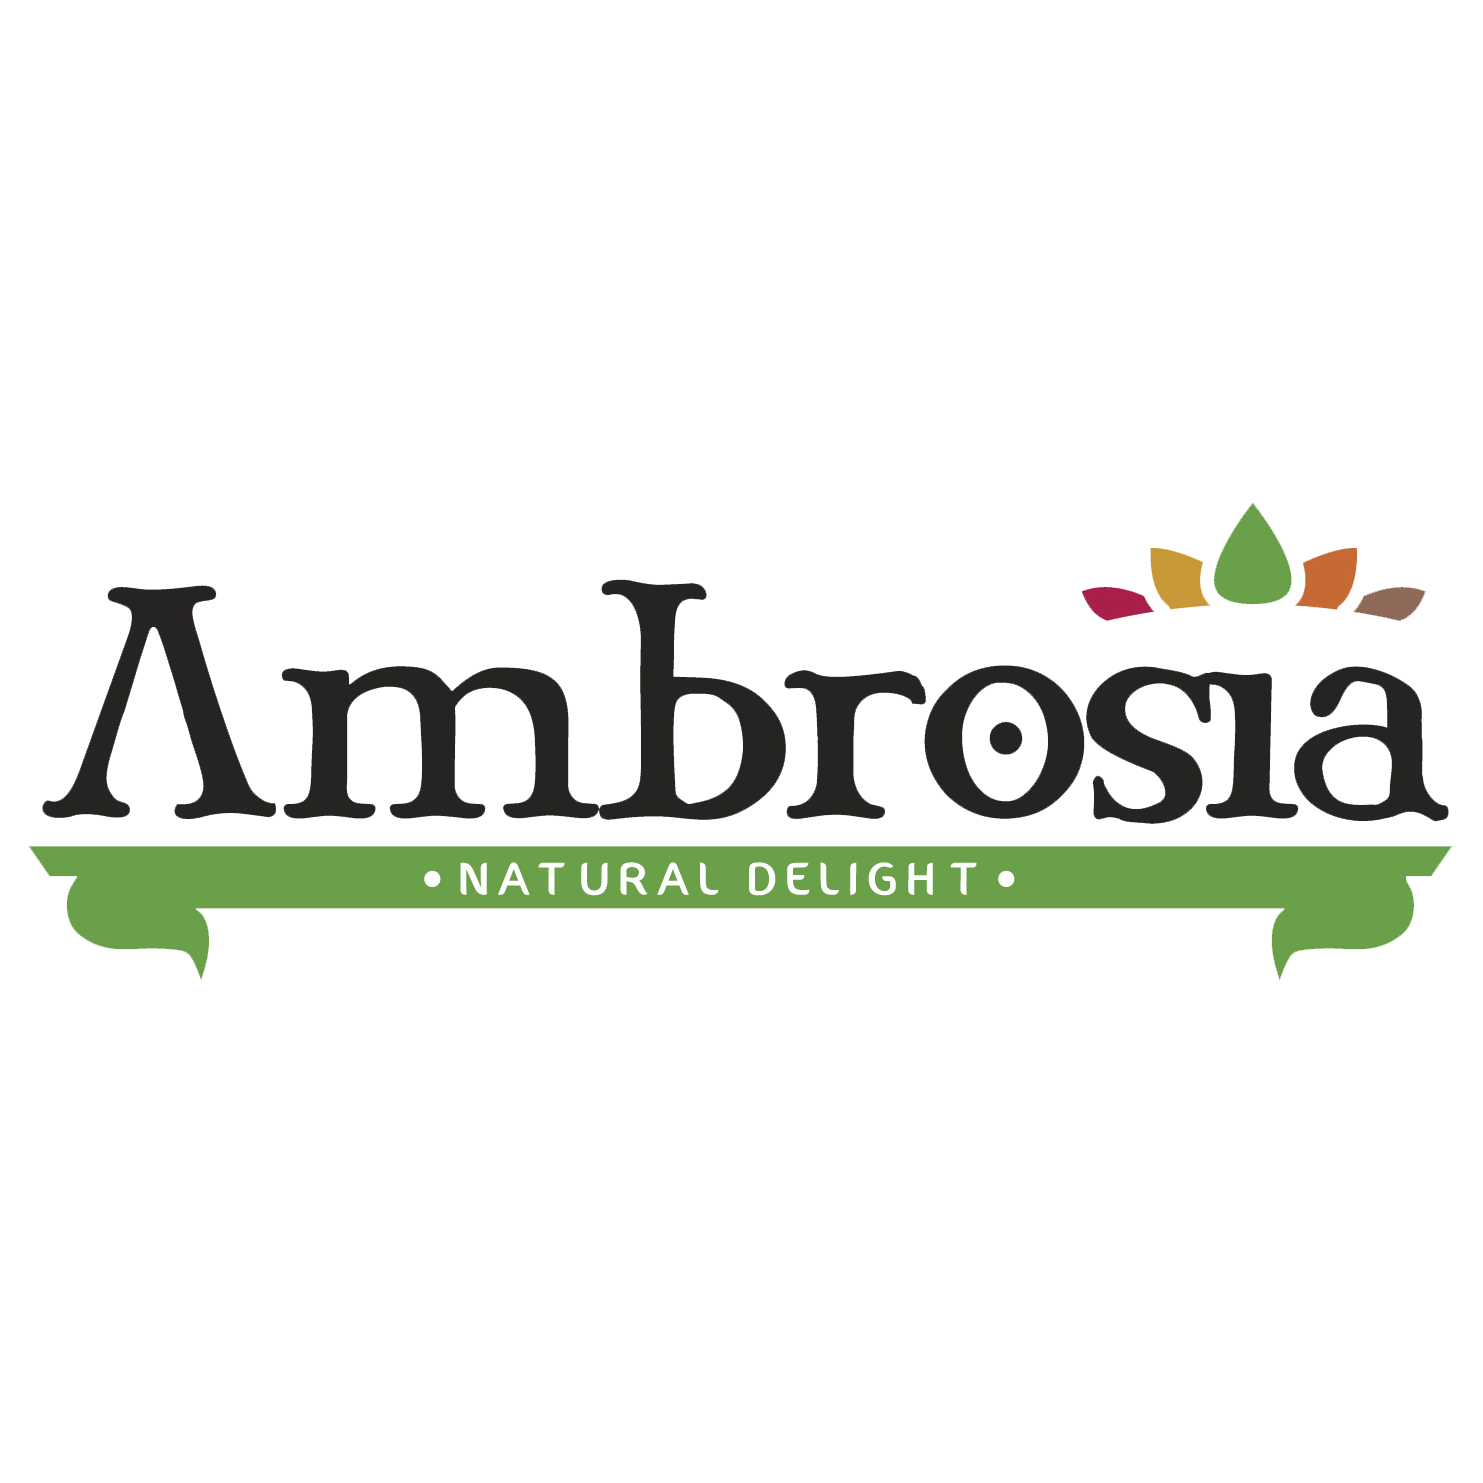 ambrosia